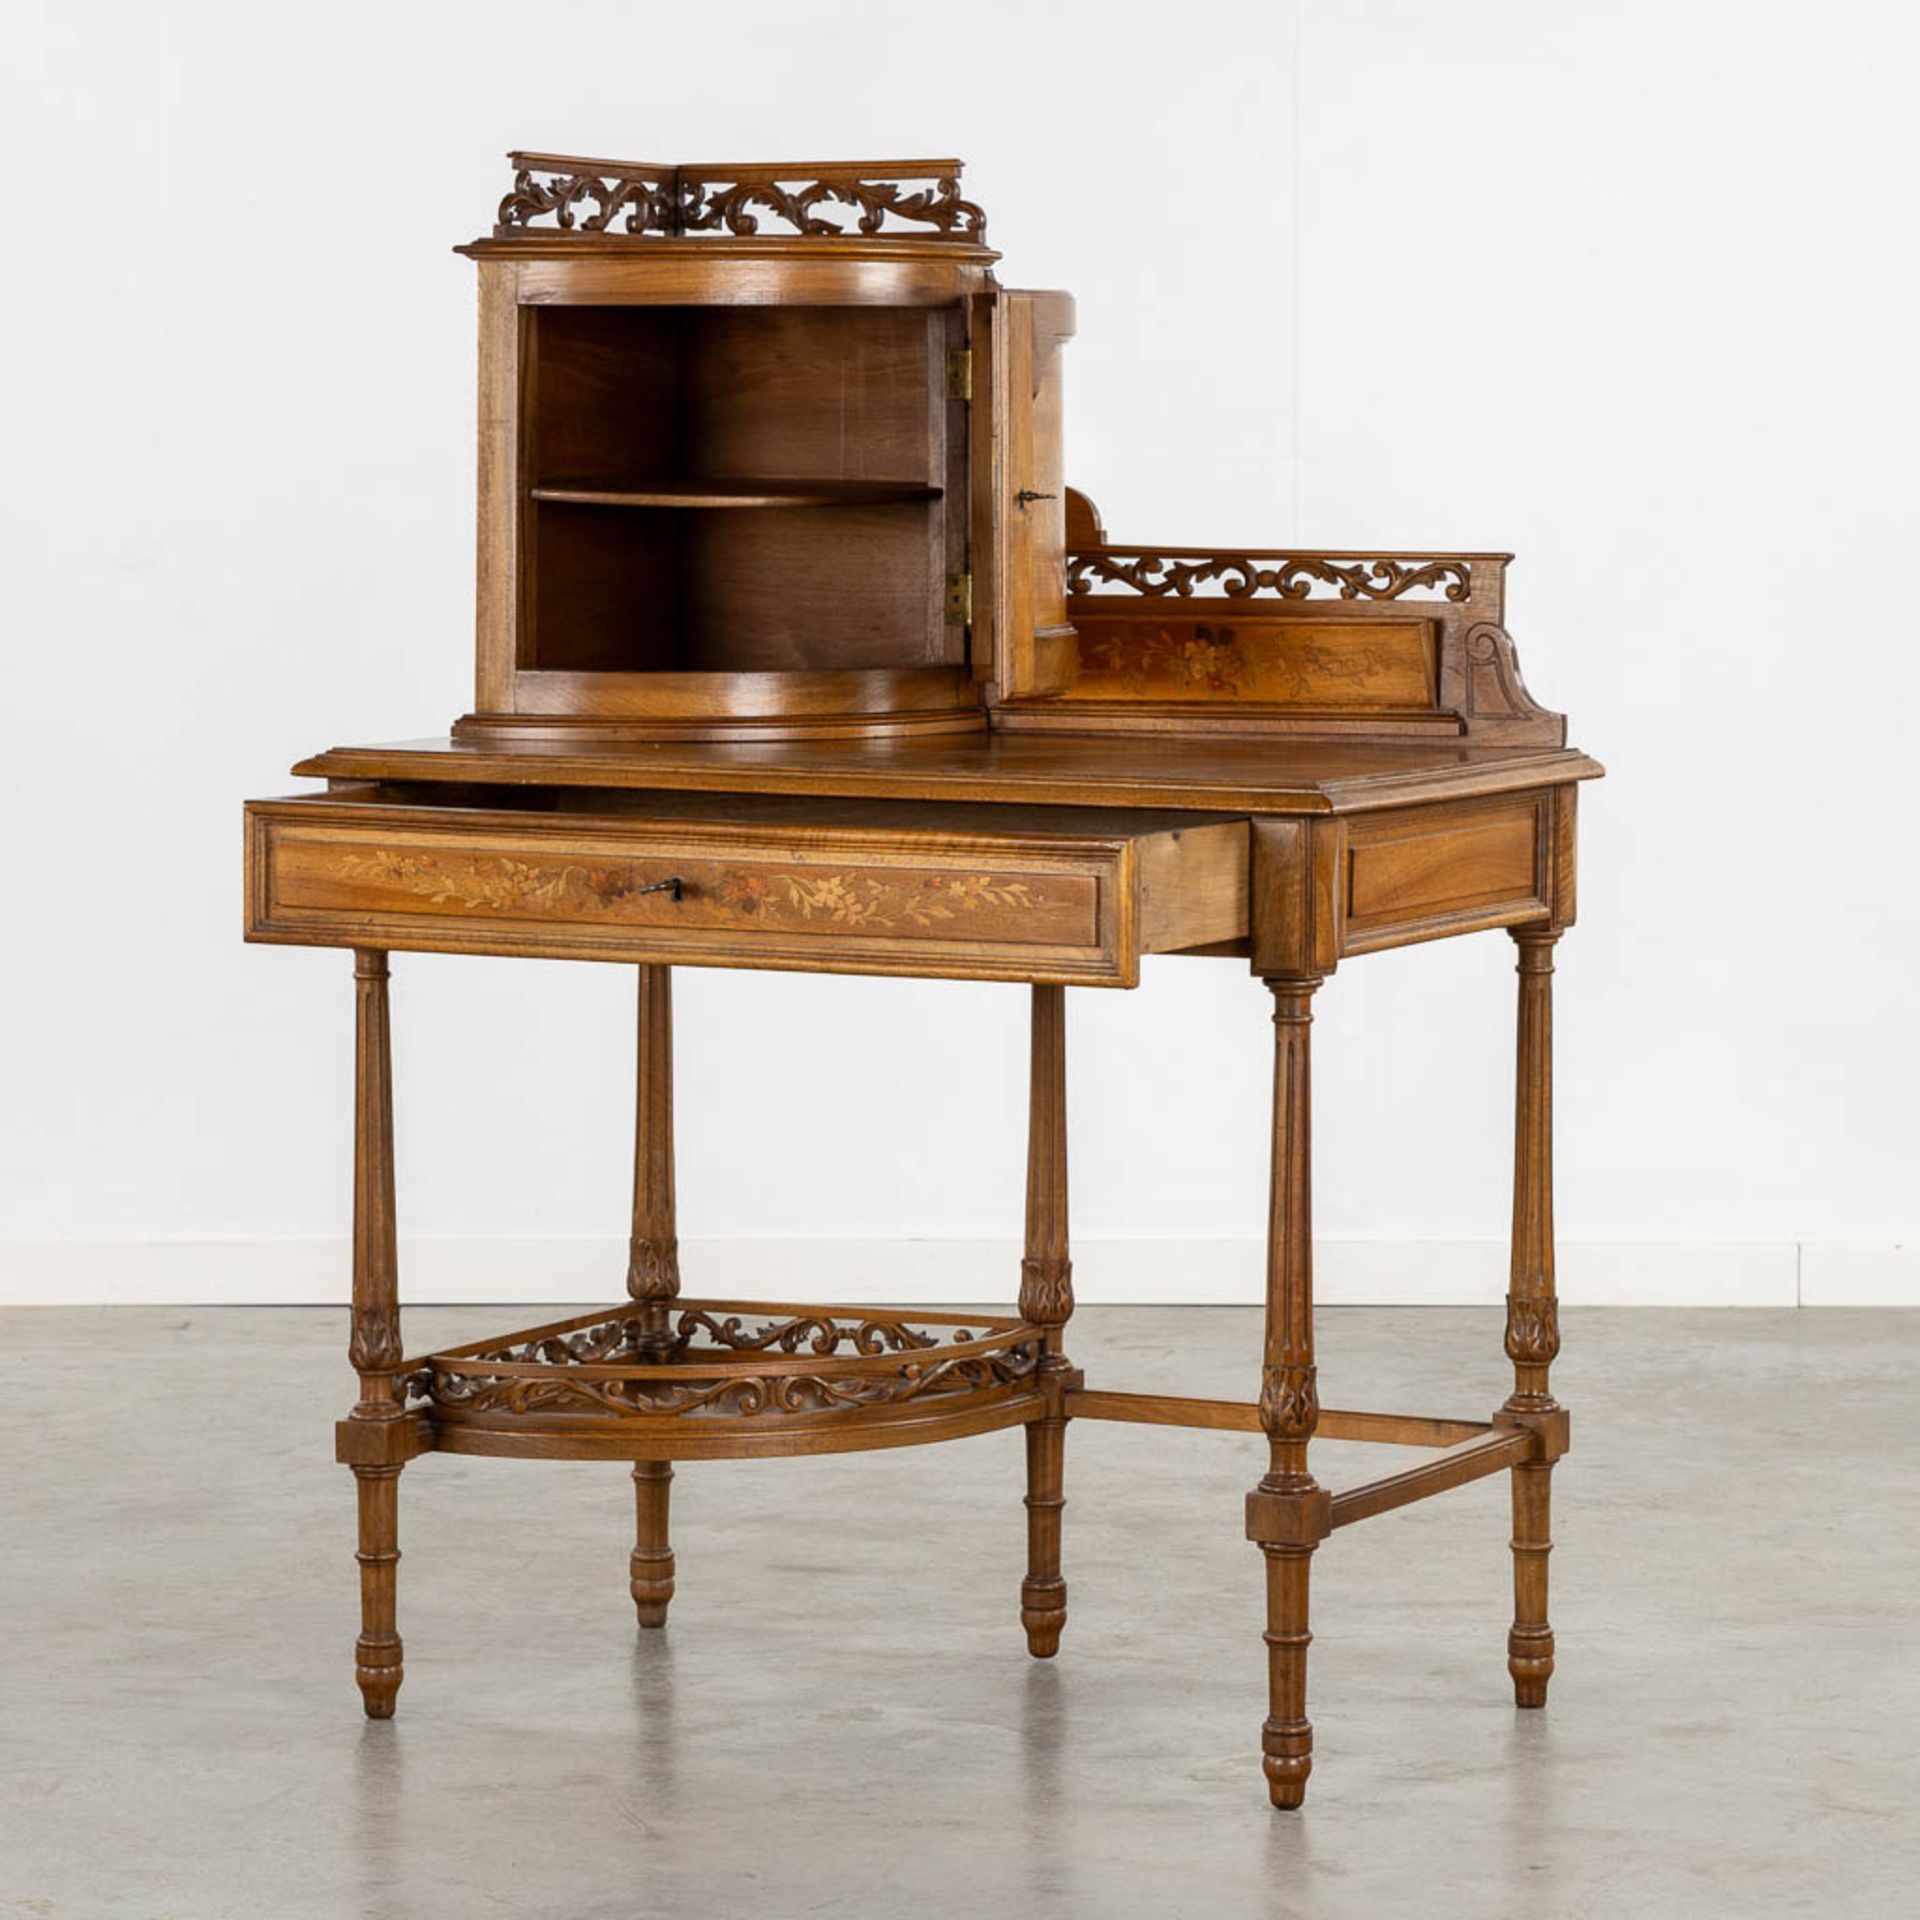 An elegant ladies' desk, walnut with marquetry inlay. 19th C. (L:50 x W:88 x H:120 cm) - Image 3 of 12